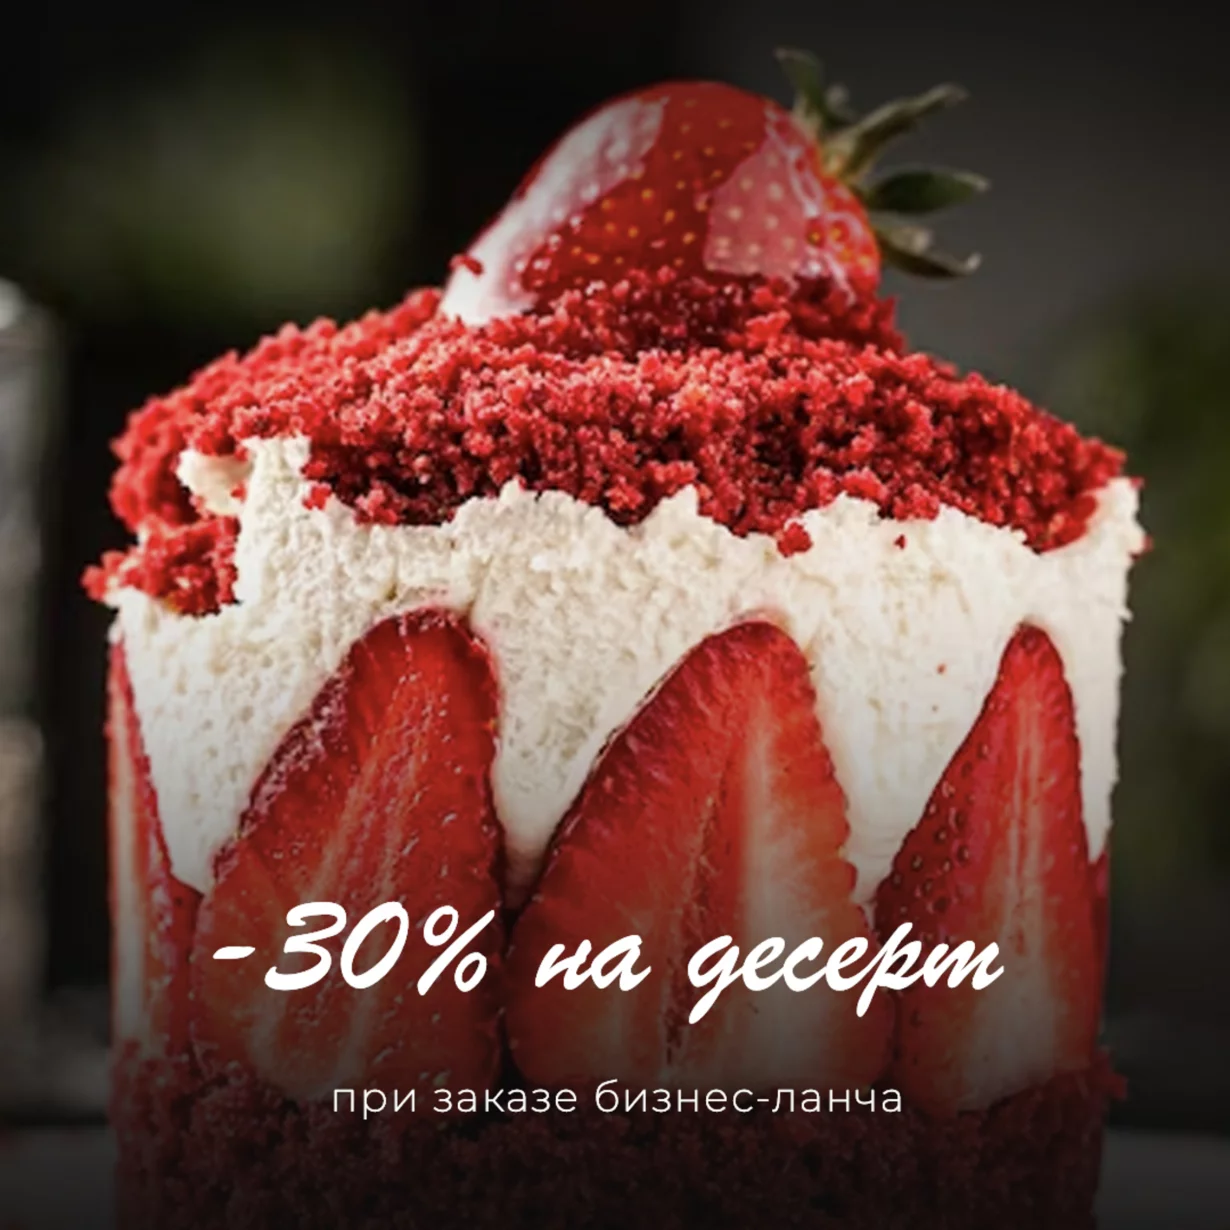 -30% на десерты при заказе бизнес-ланча